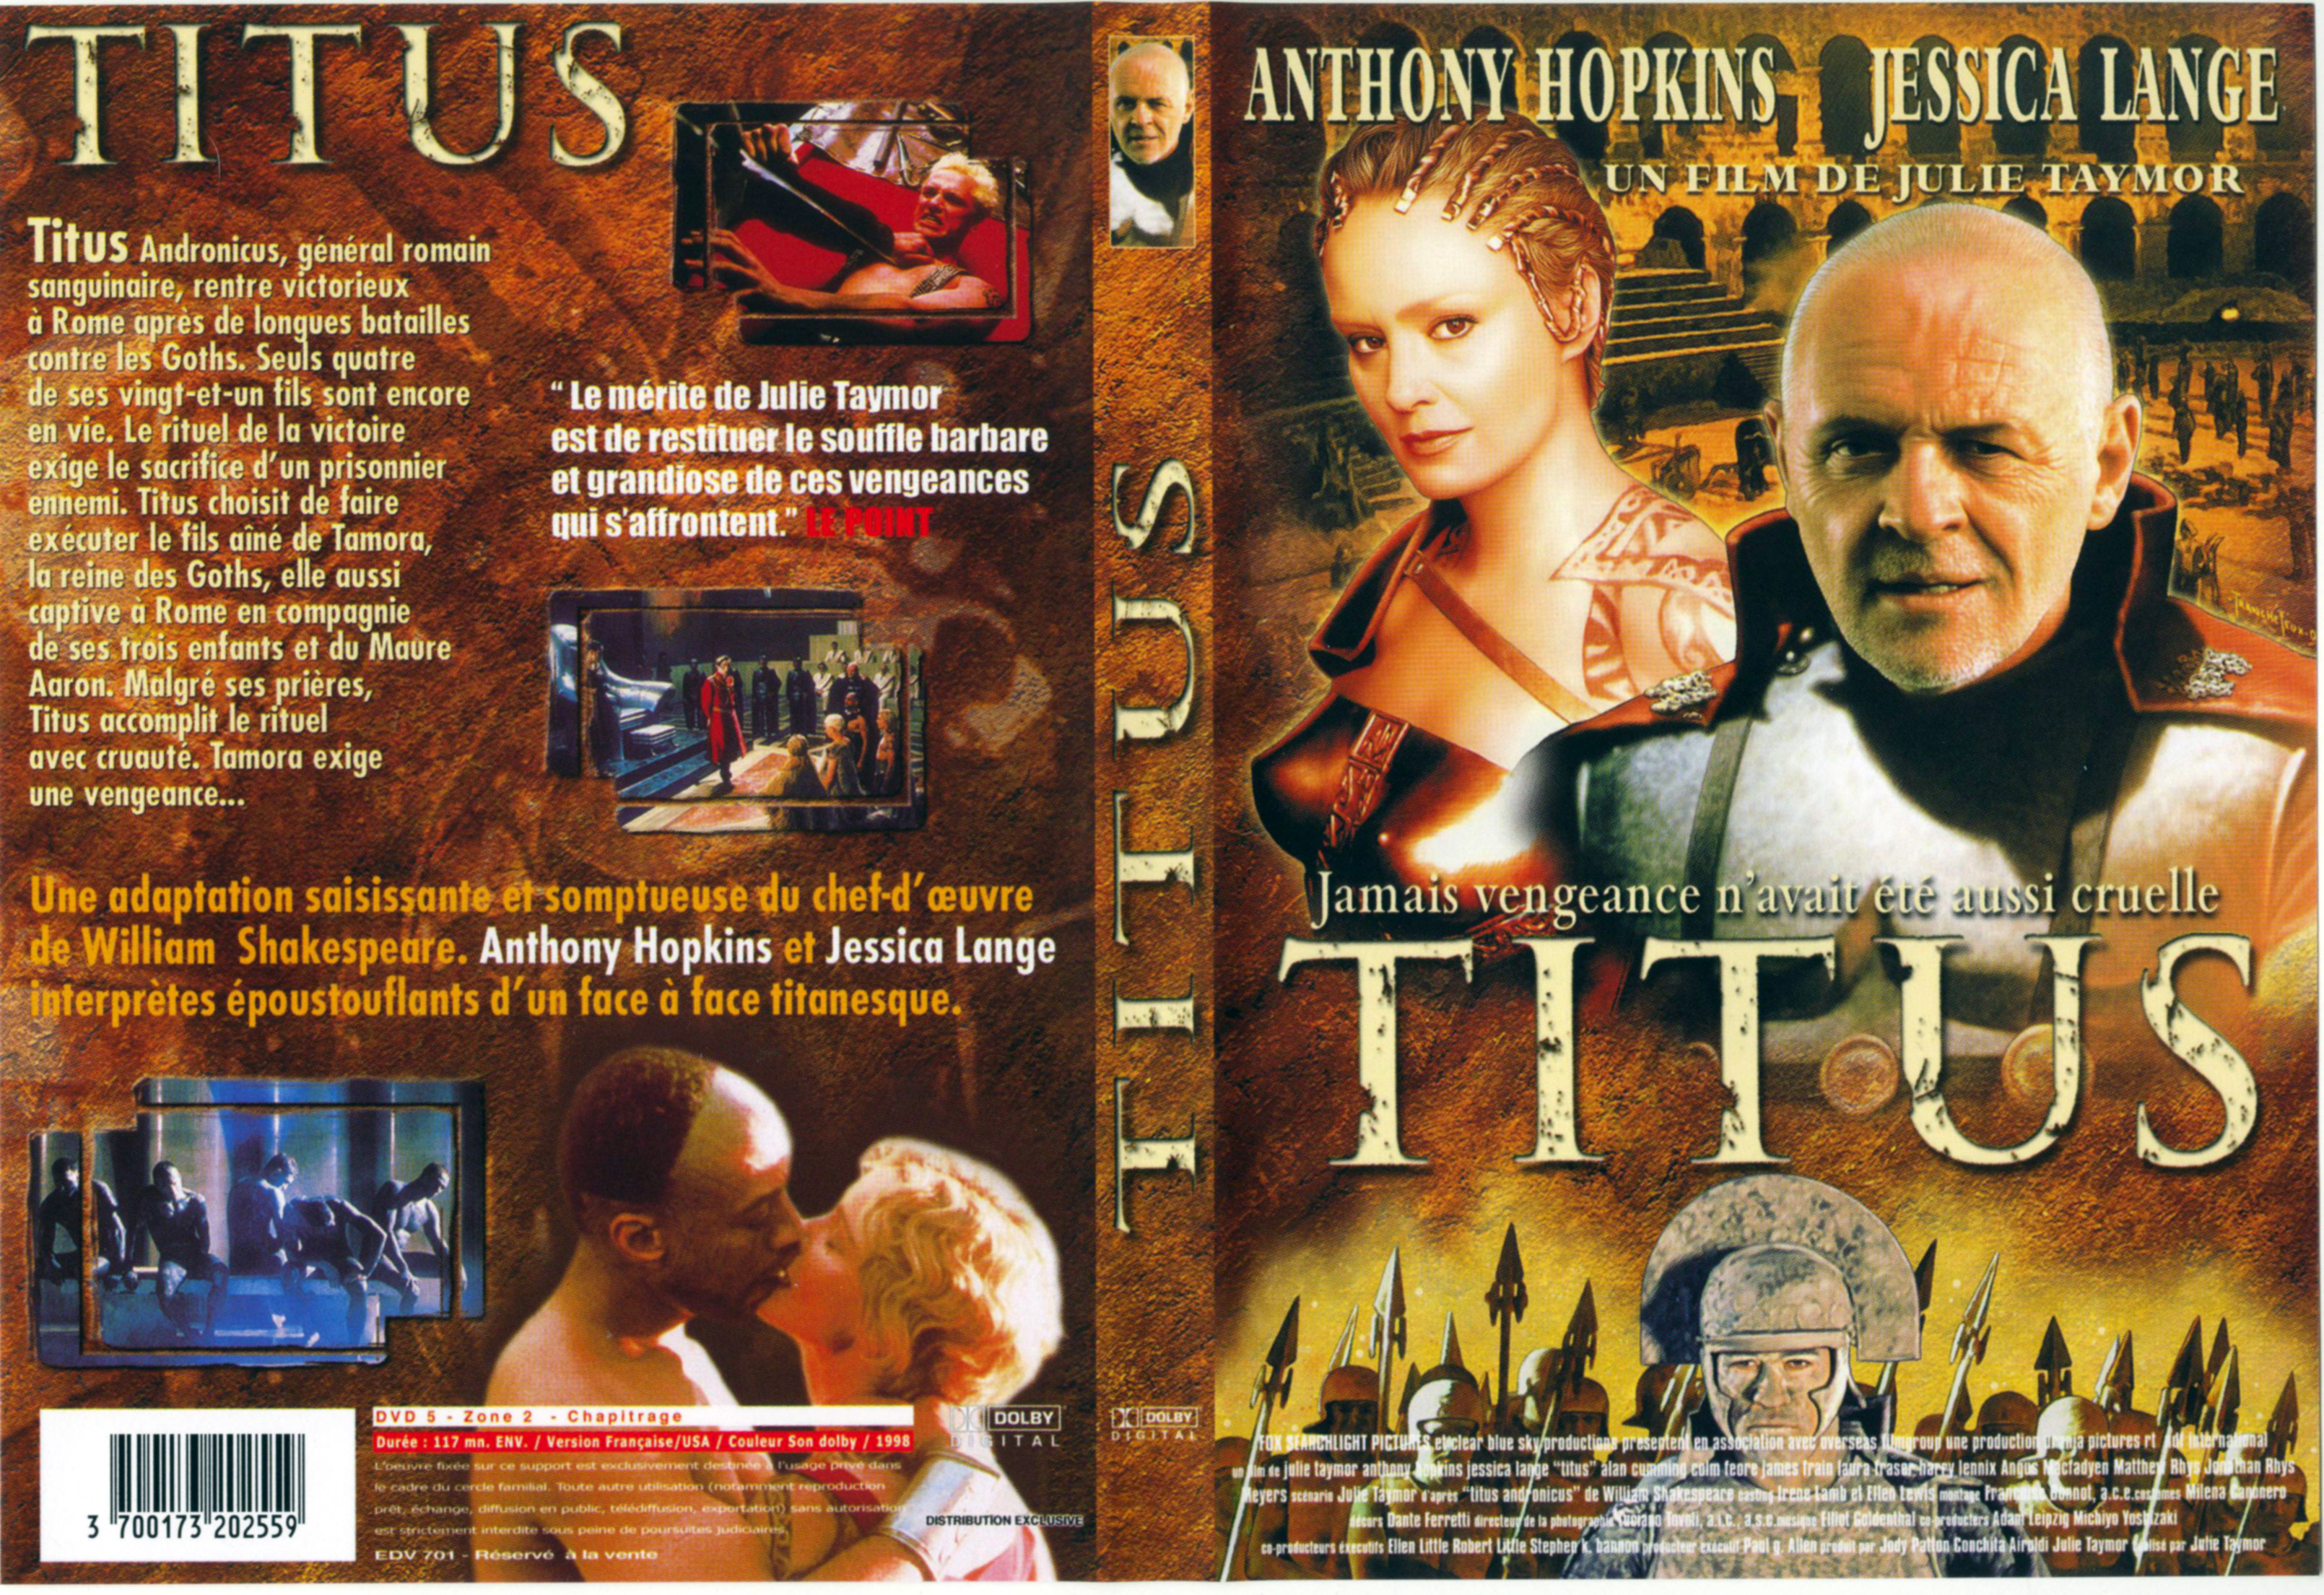 Jaquette DVD Titus v2